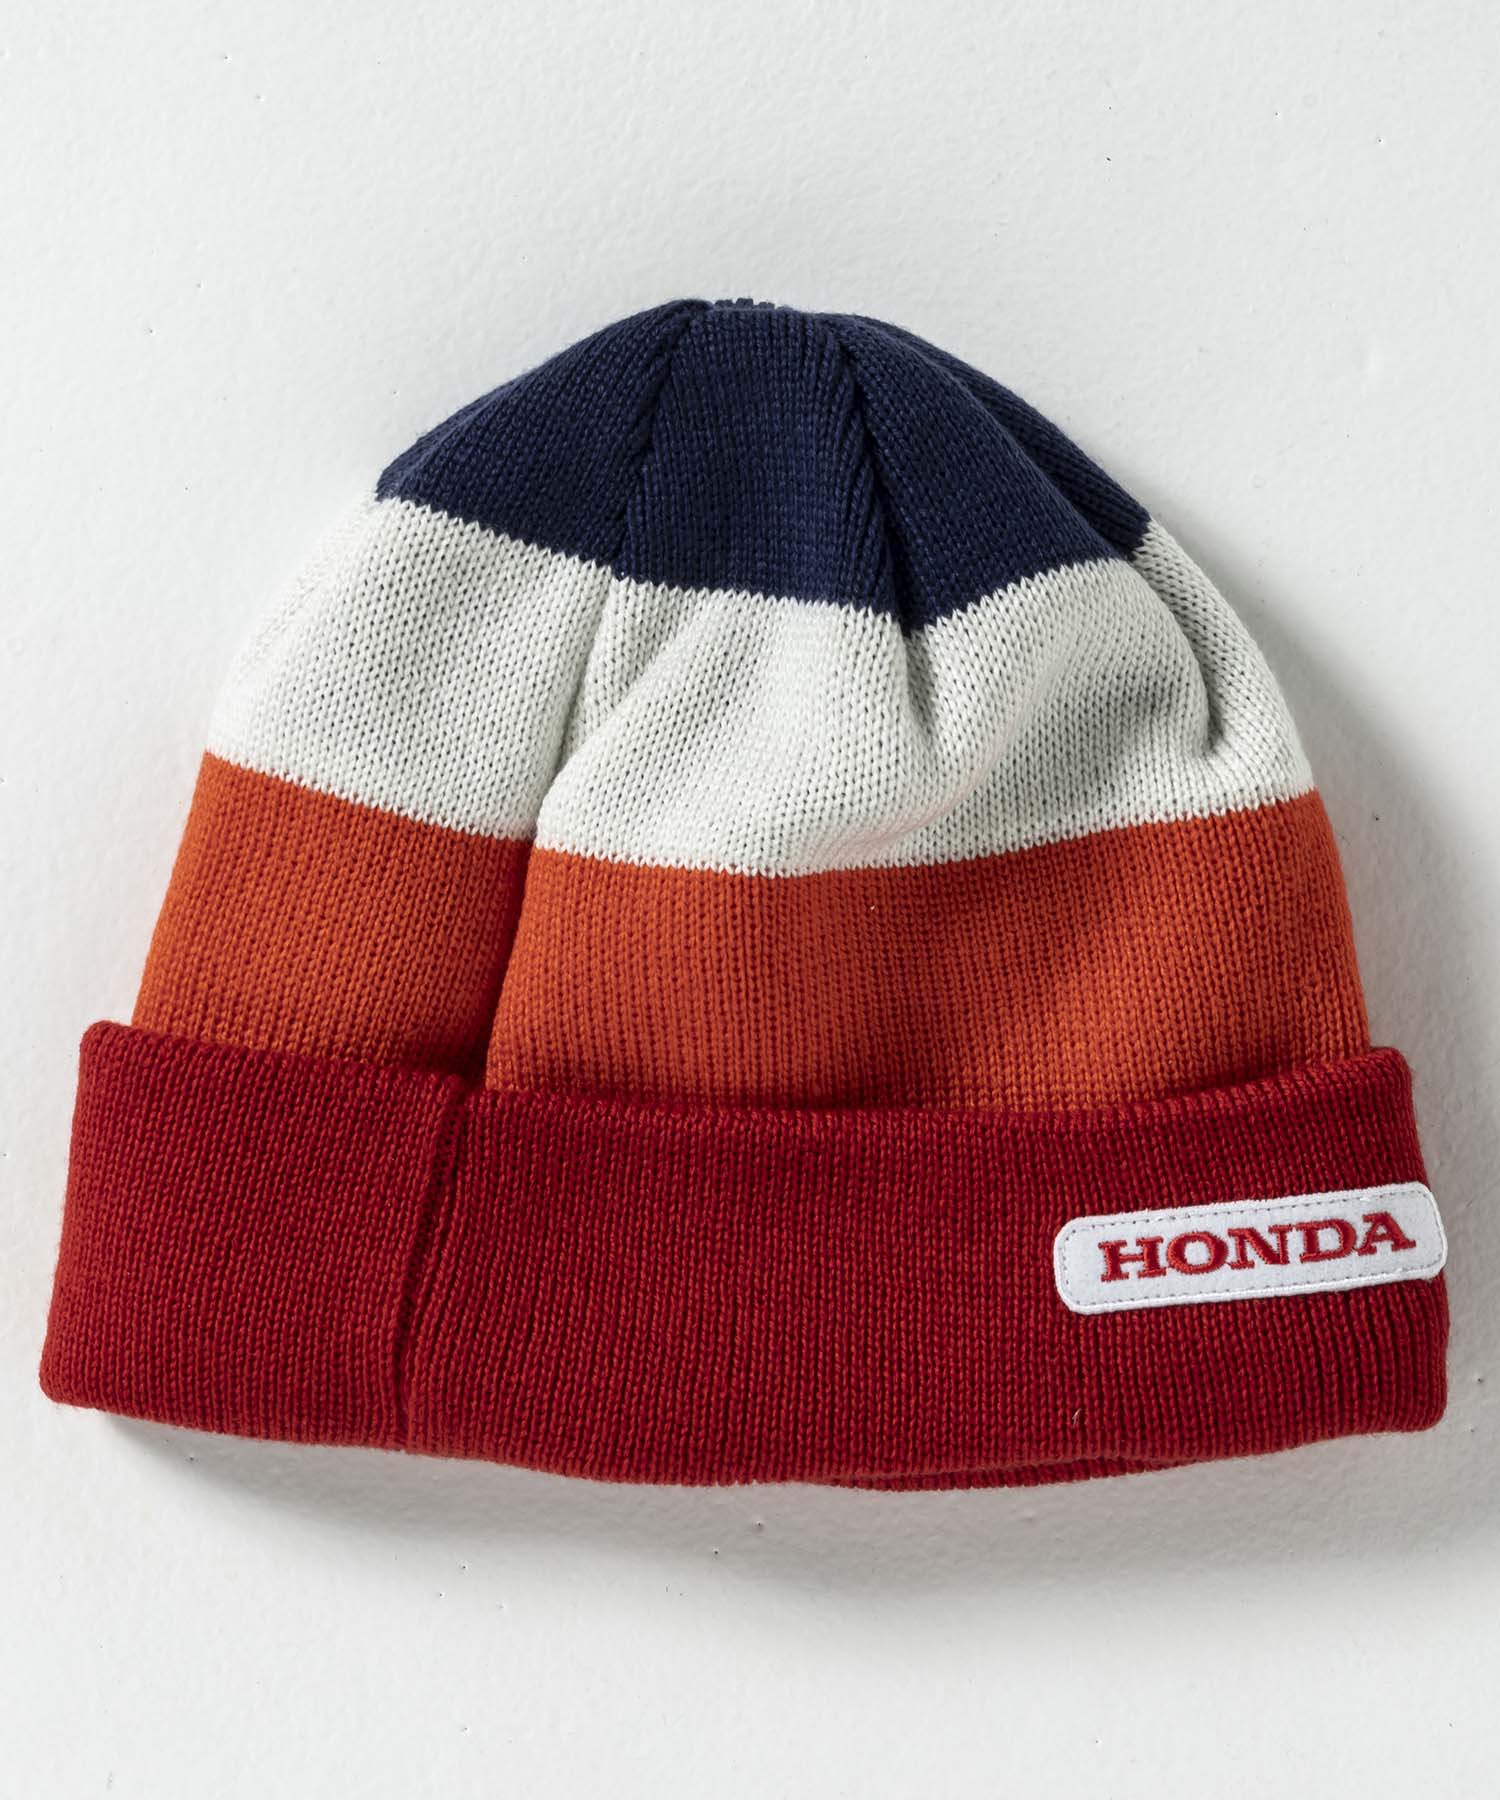 【MENS】スキーウェア ニットキャップ Honda Touring Watch cap / HONDA /phenixスキーウェア23AW新作